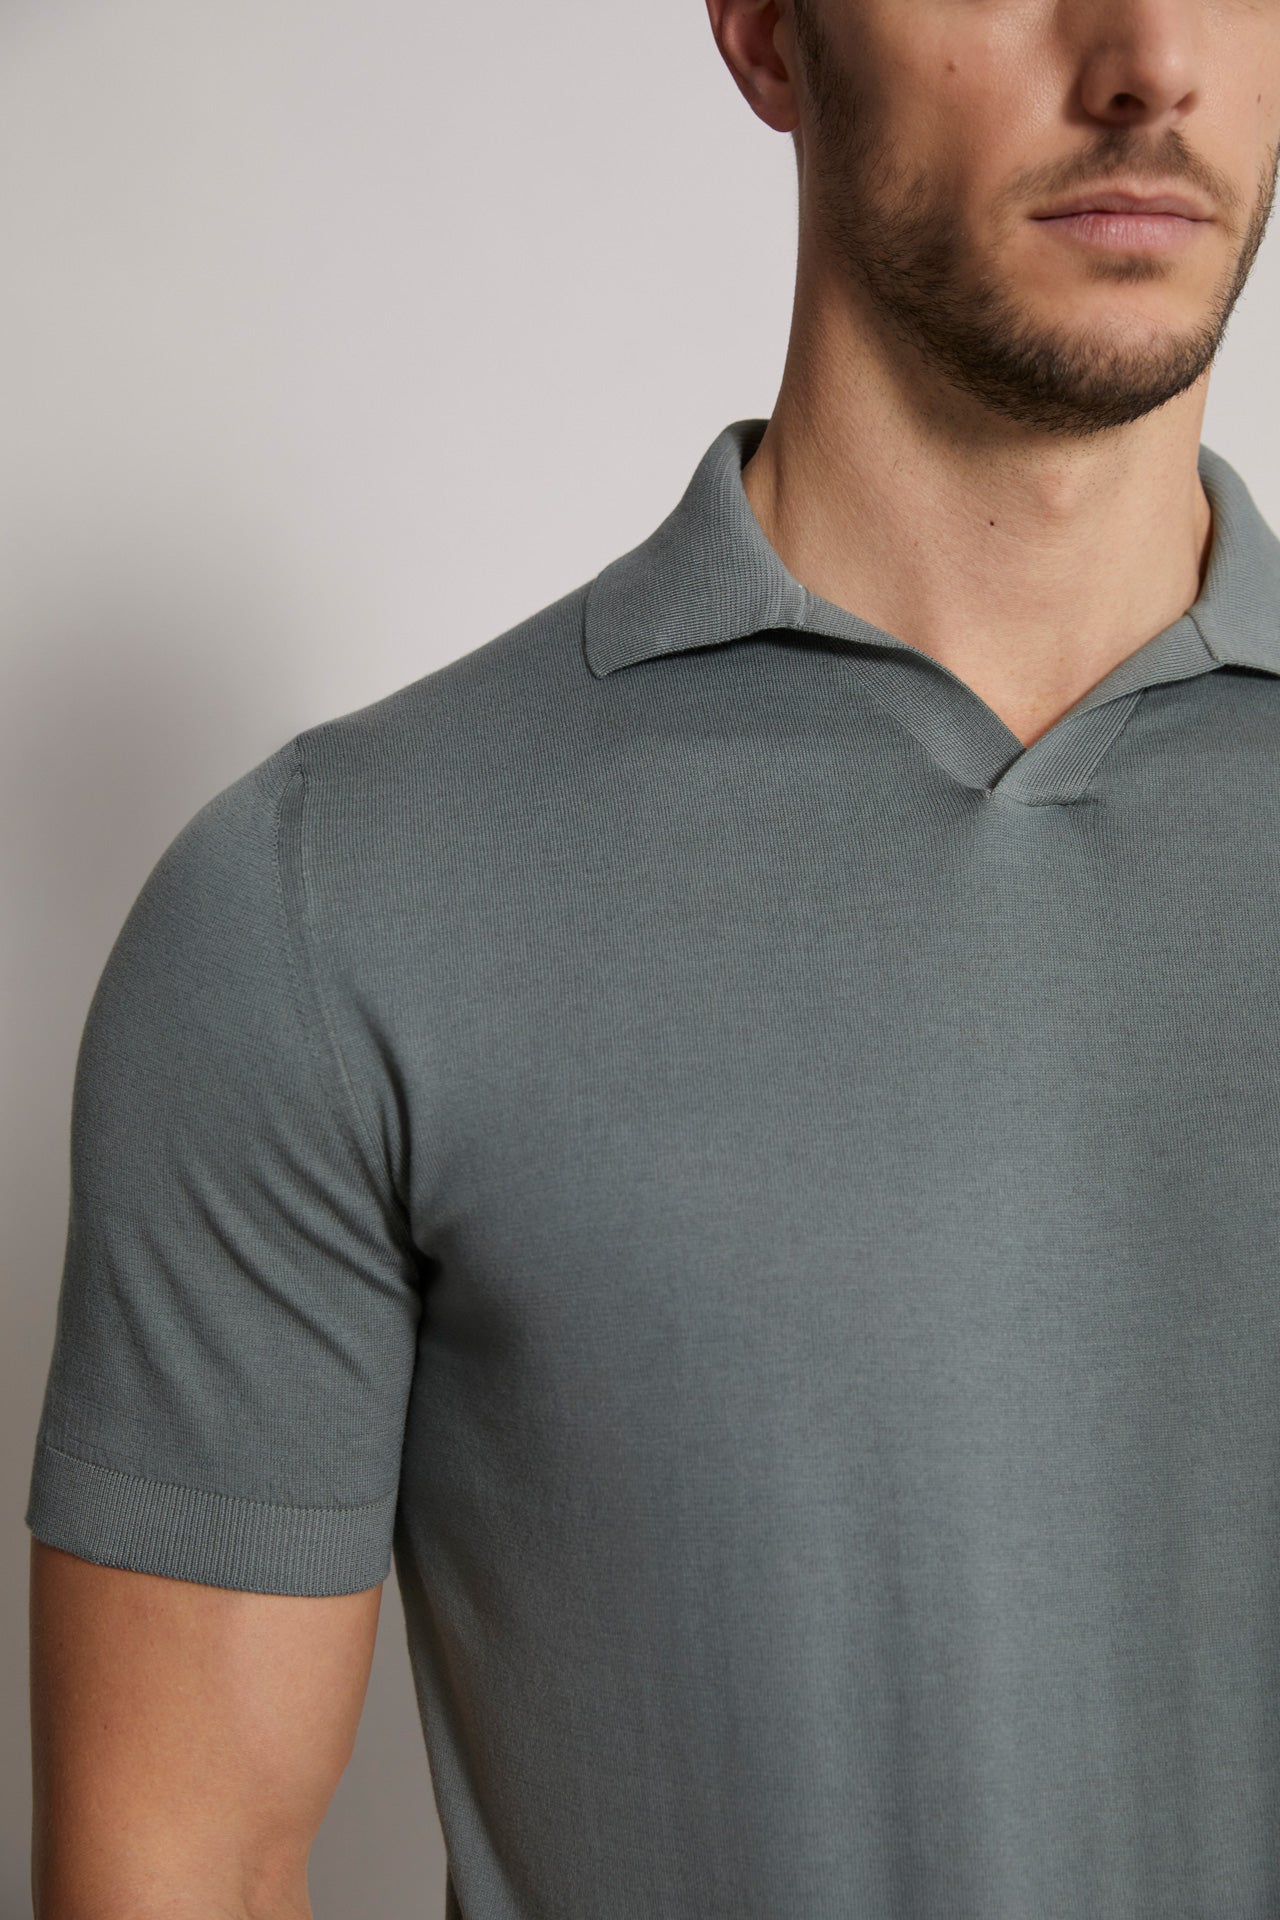 Buttonless organic cotton knitted polo t-shirt light green - neck detail